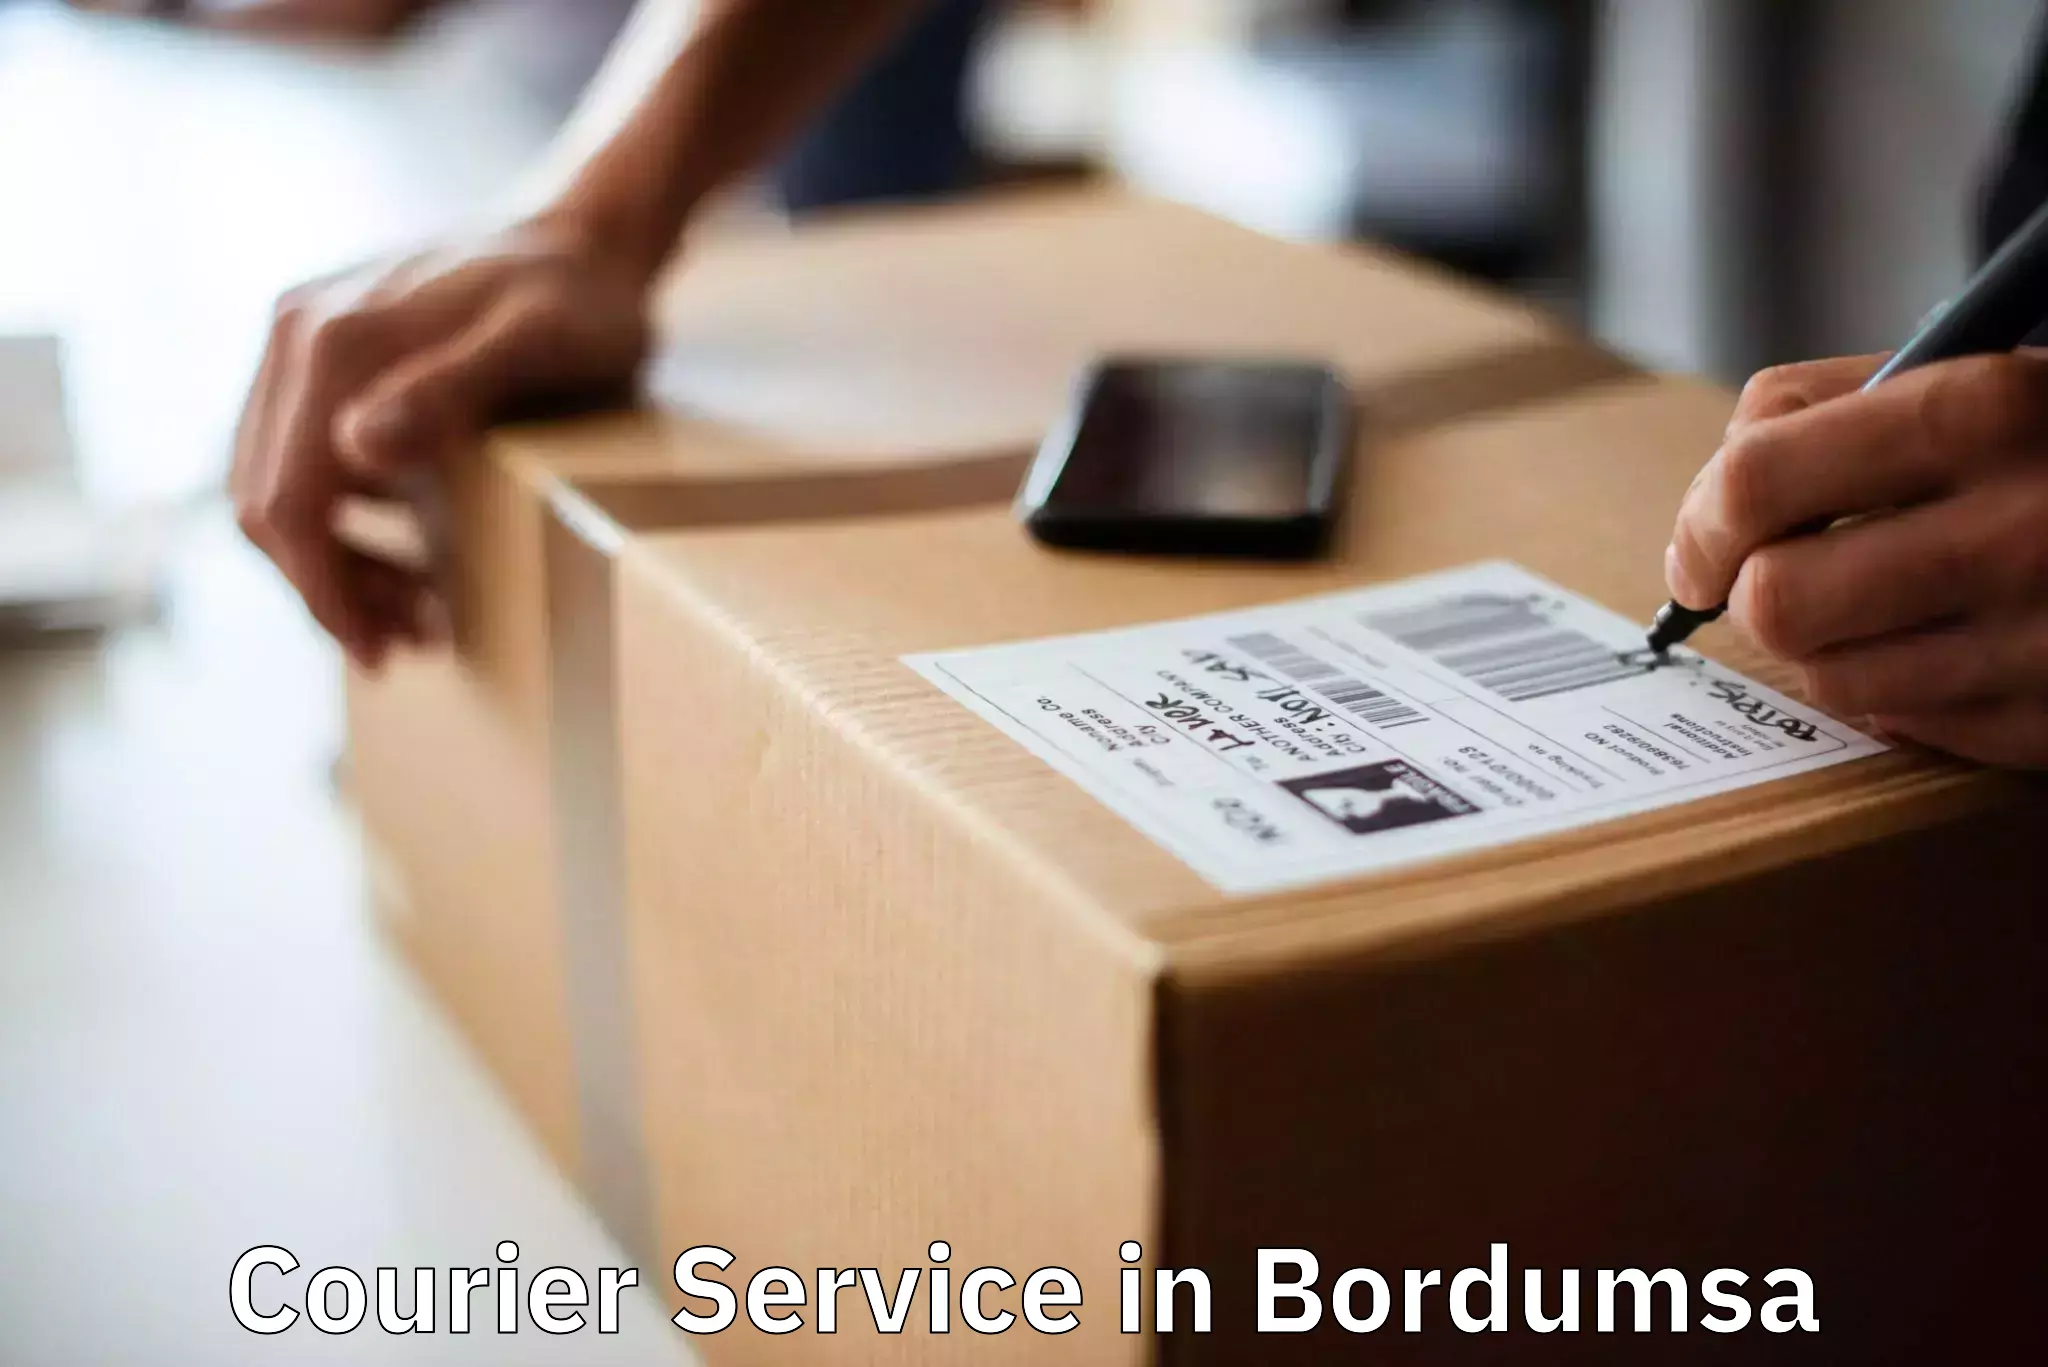 Customer-focused courier in Bordumsa